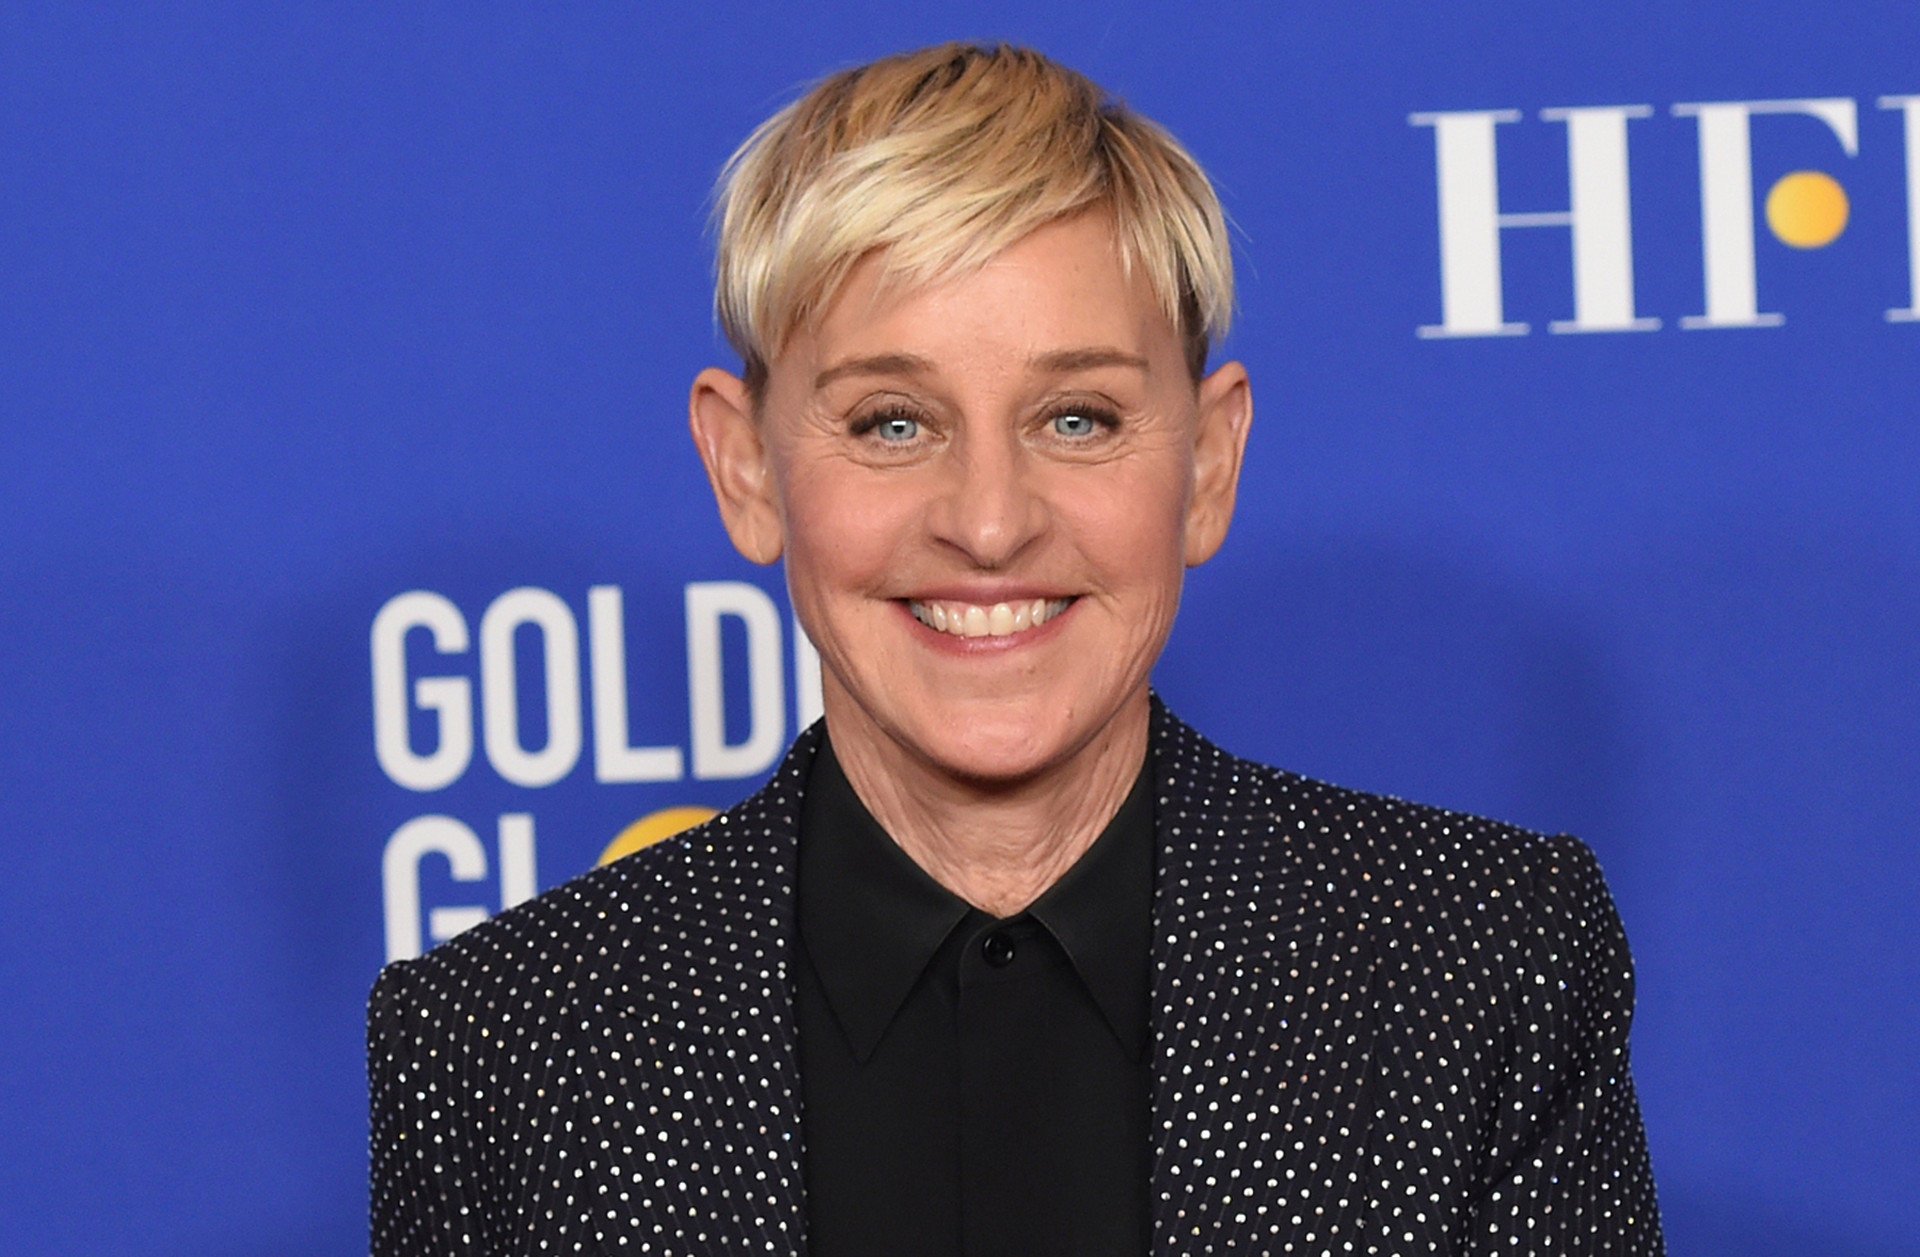 Ellen DeGeneres Addresses Toxic Workplace Allegations on Her Show